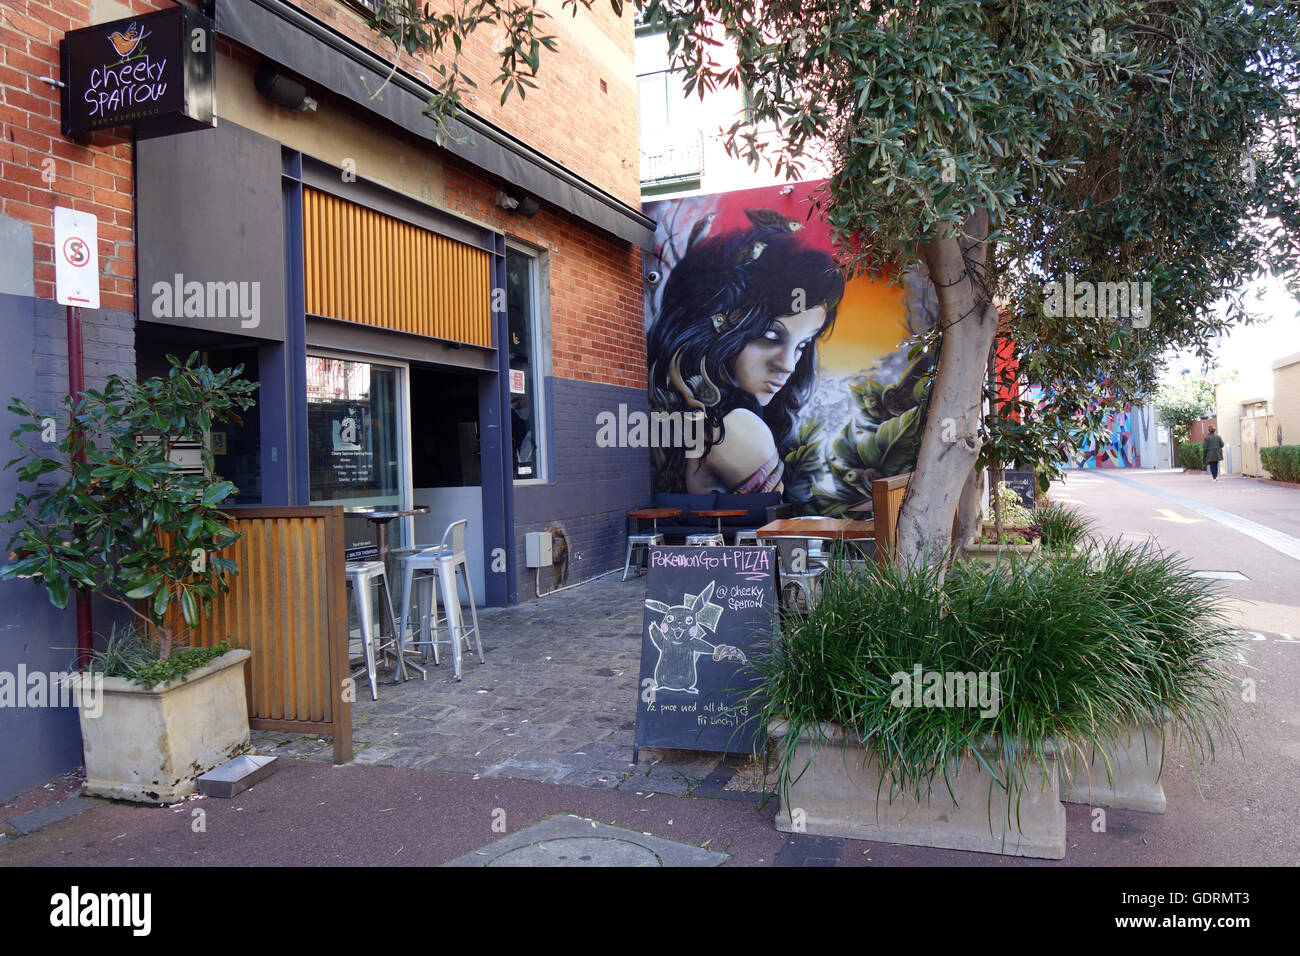 Cafe offre PokemonGo e pizza offerte, sfrontato Sparrow, Lupo Lane, CBD di Perth, Western Australia. N. PR Foto Stock